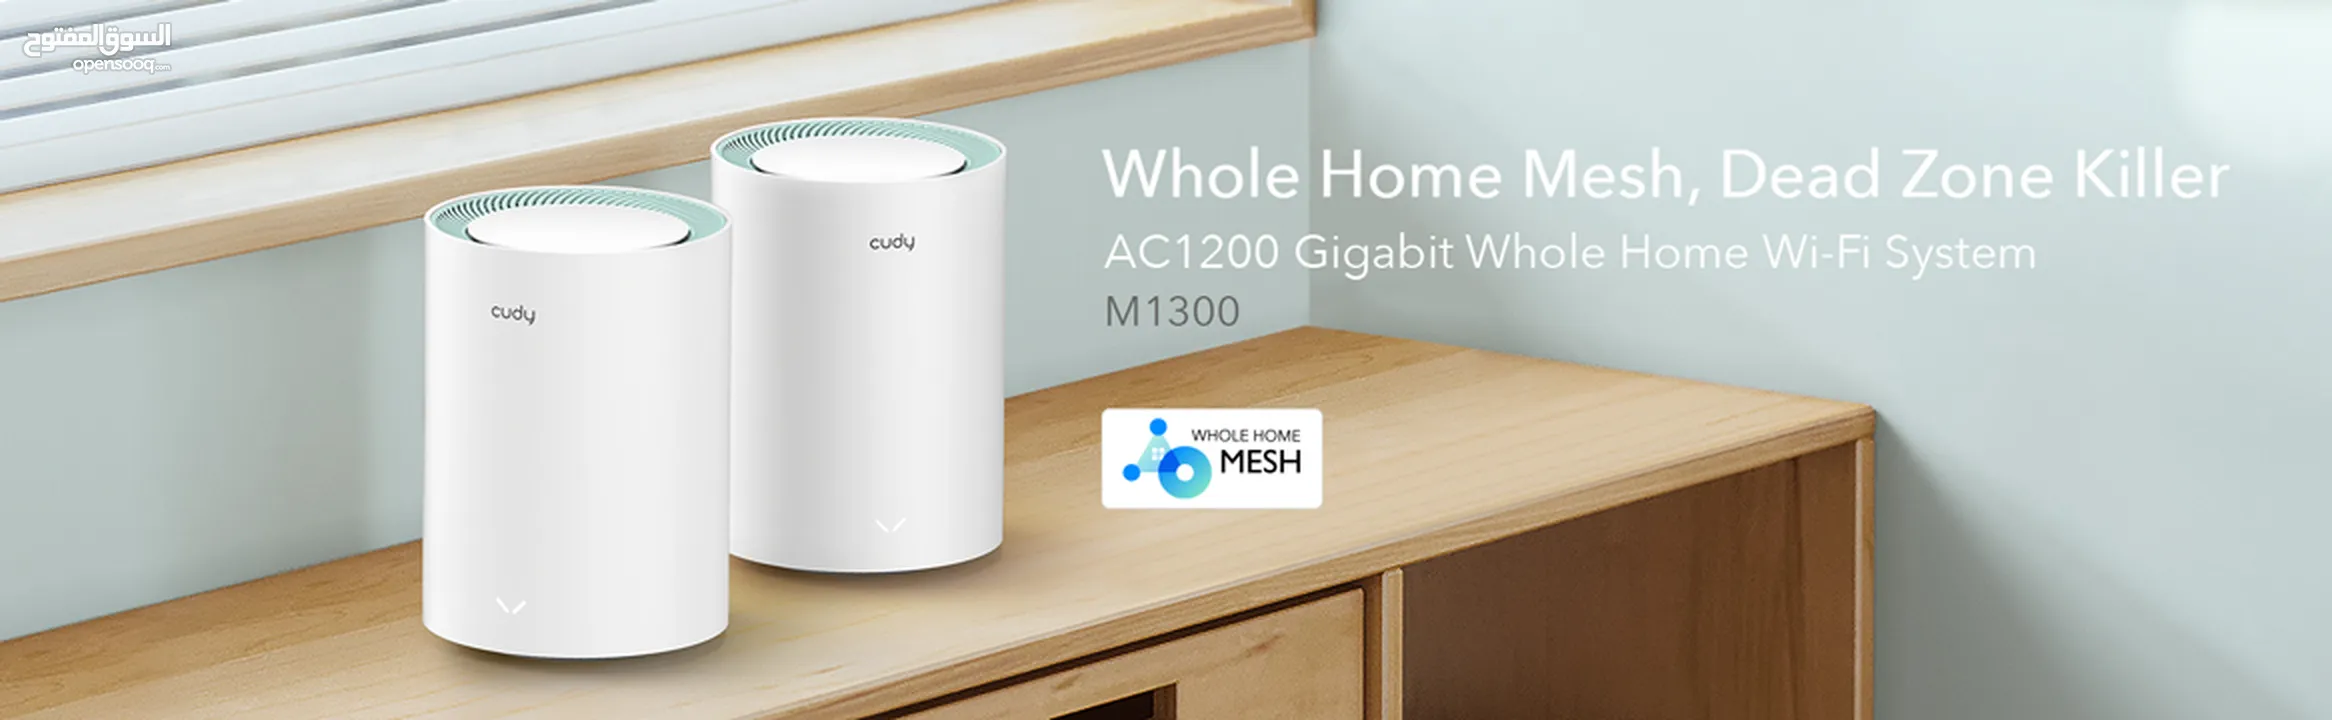 AC1200 Dual Band Whole Home Wi-Fi Mesh System, Model: M1300 جهاز موسع للشبكة ميش كودي أصلي